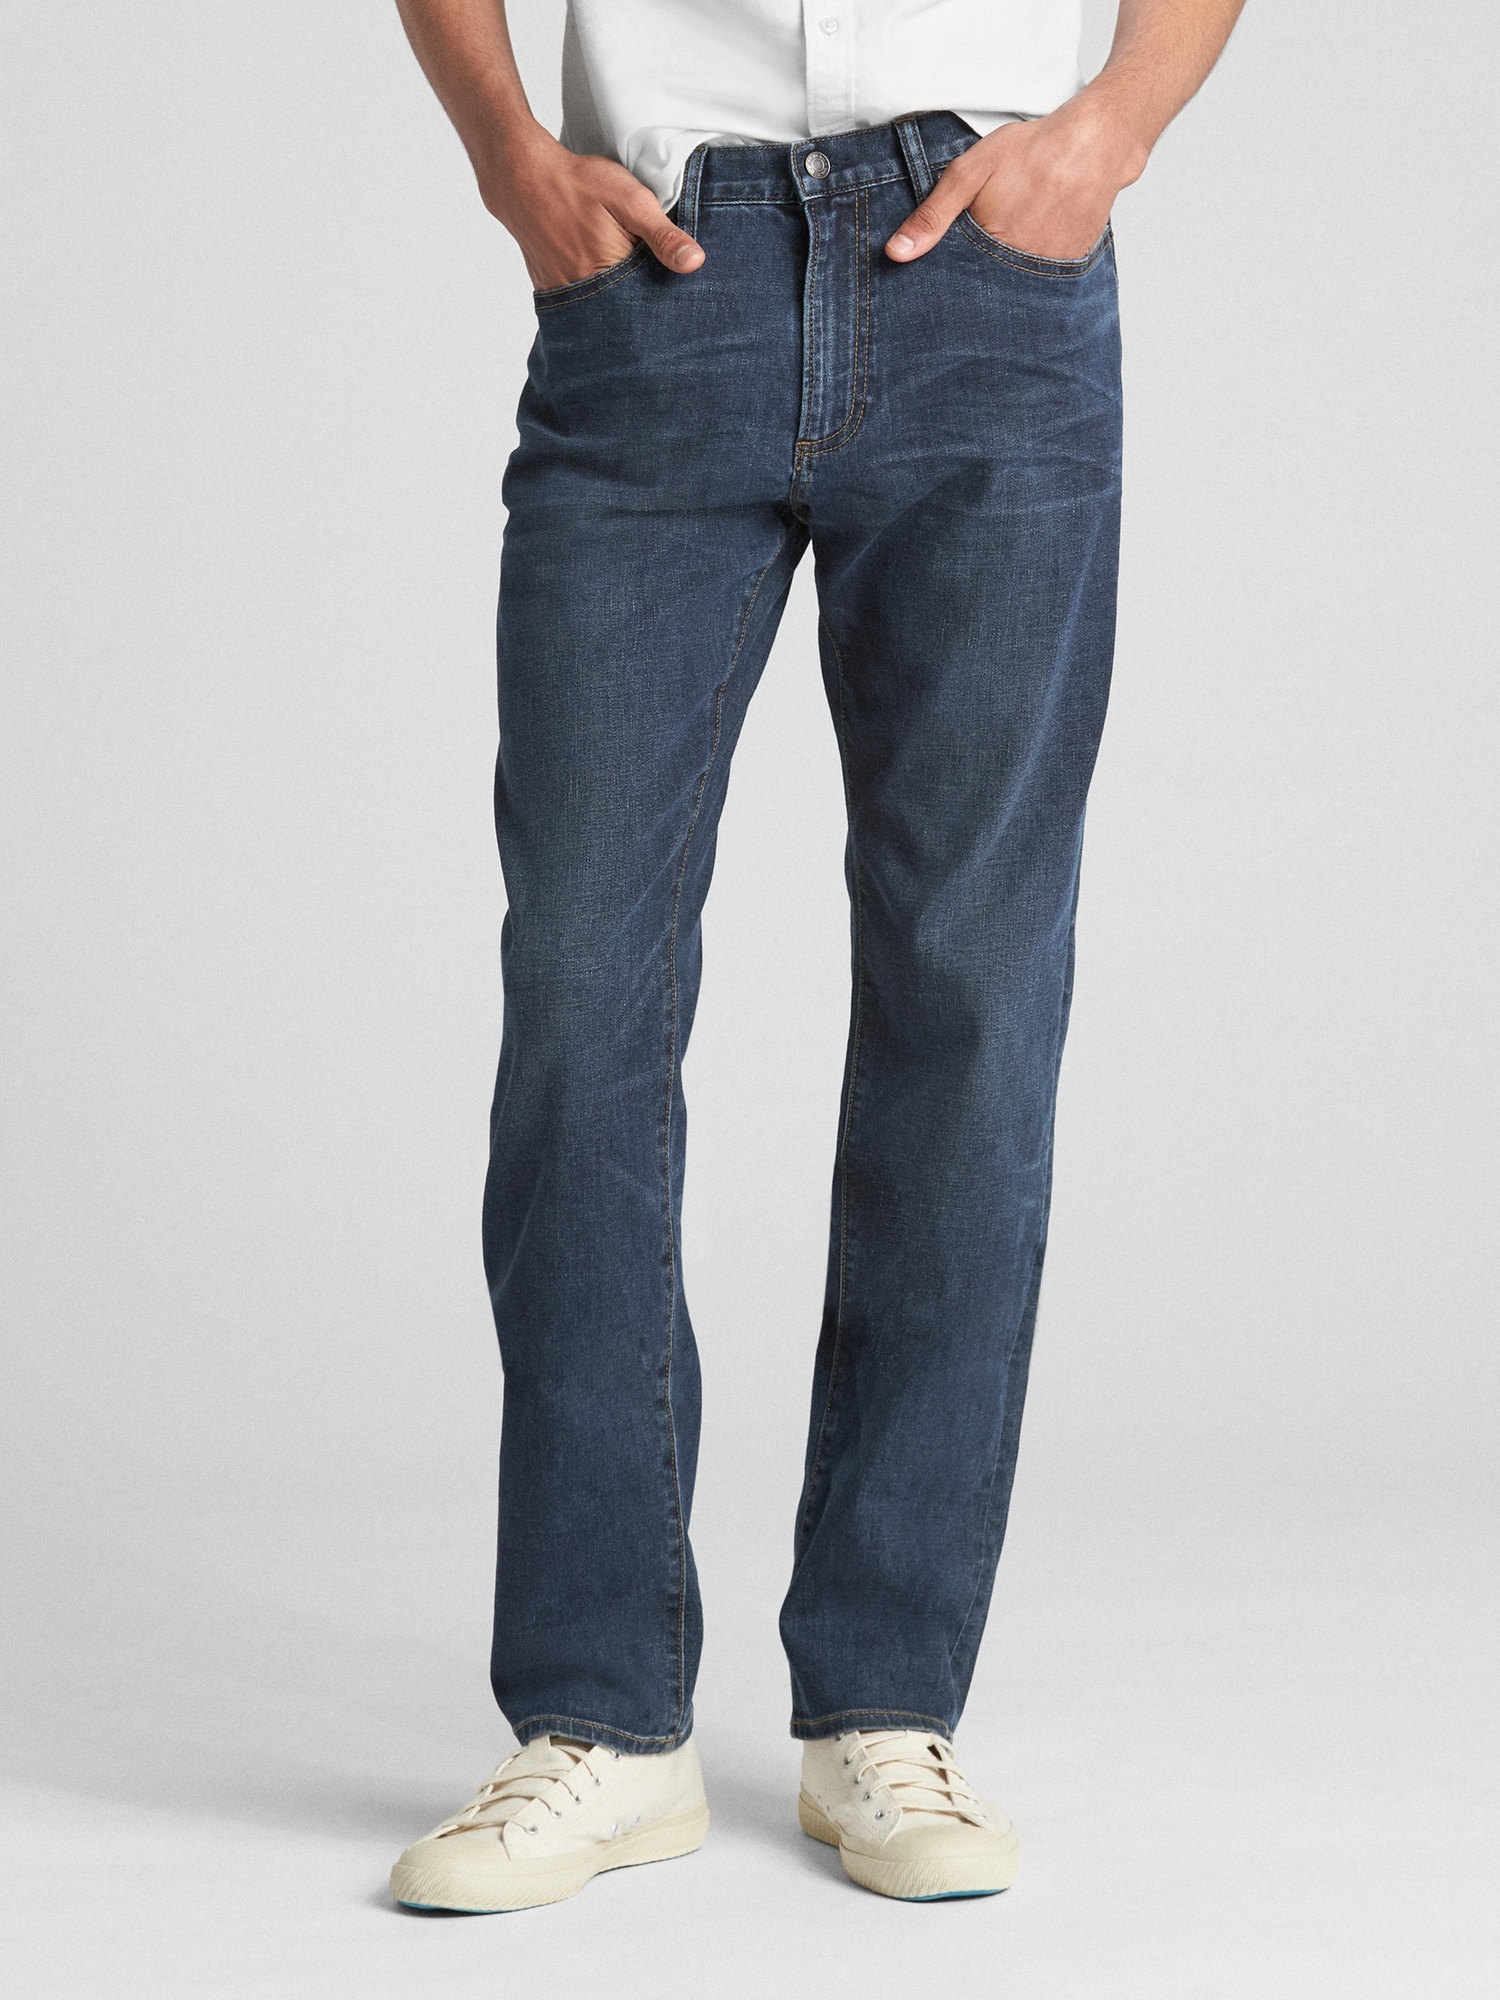 Wearlight Slim Jeans with GapFlex | Gap